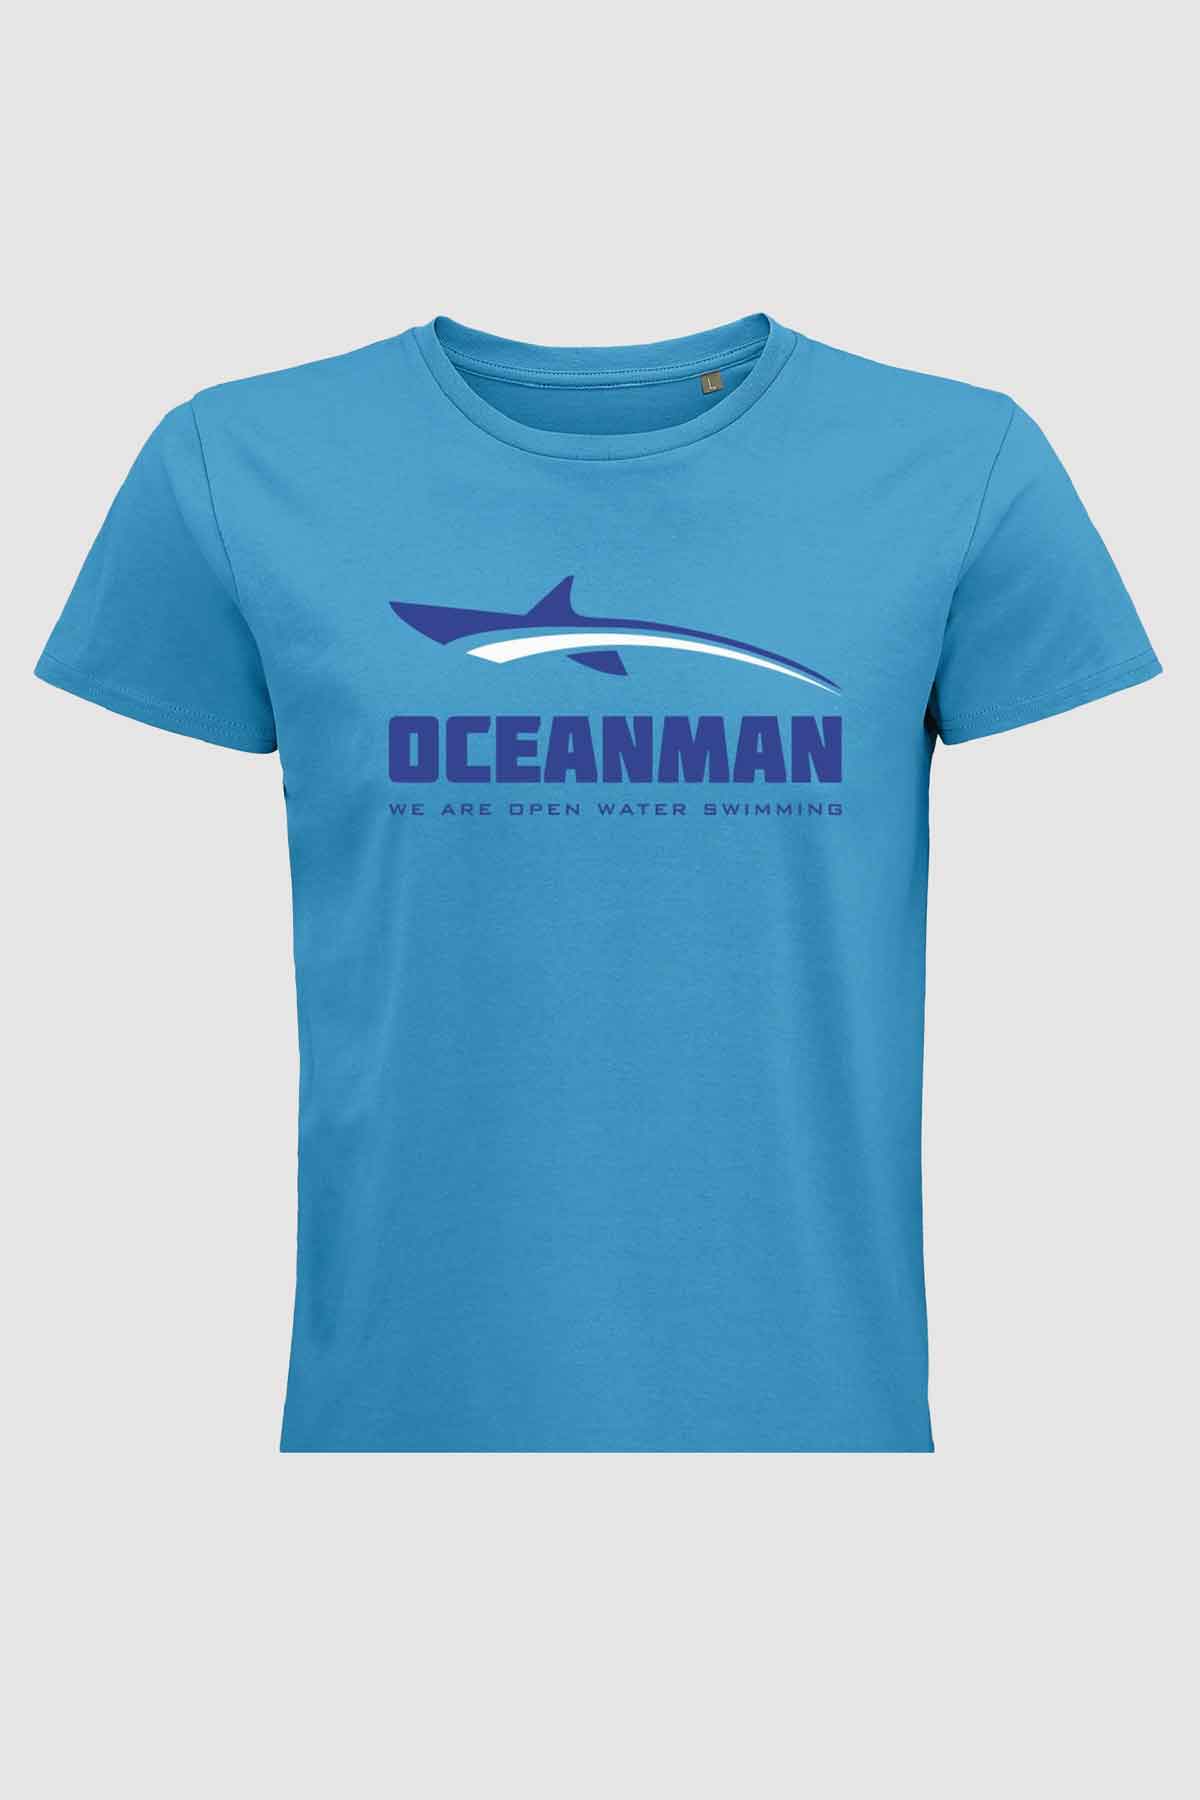 Oceanman Icon t shirt men aqua